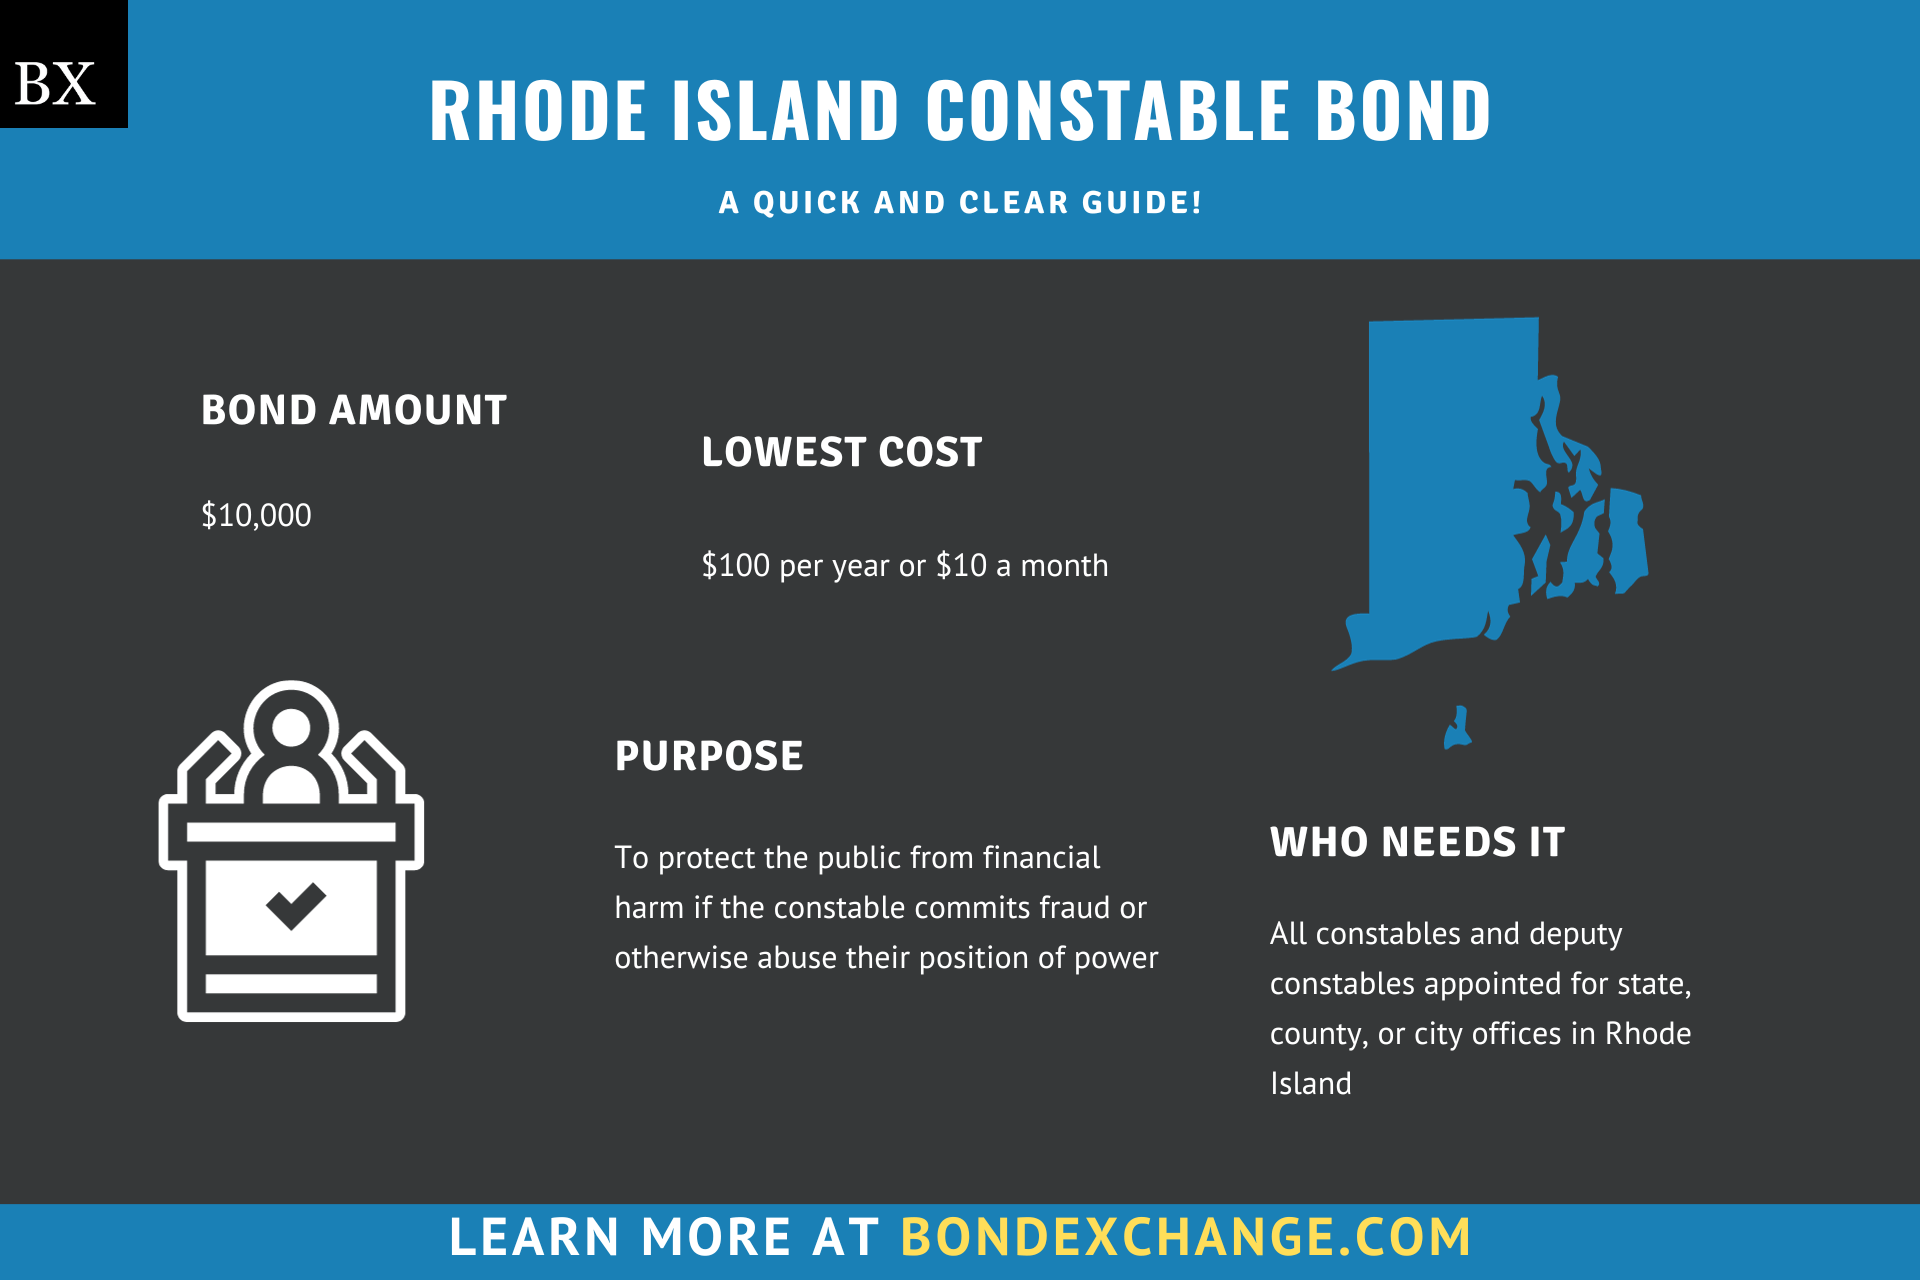 Rhode Island Constable Bond